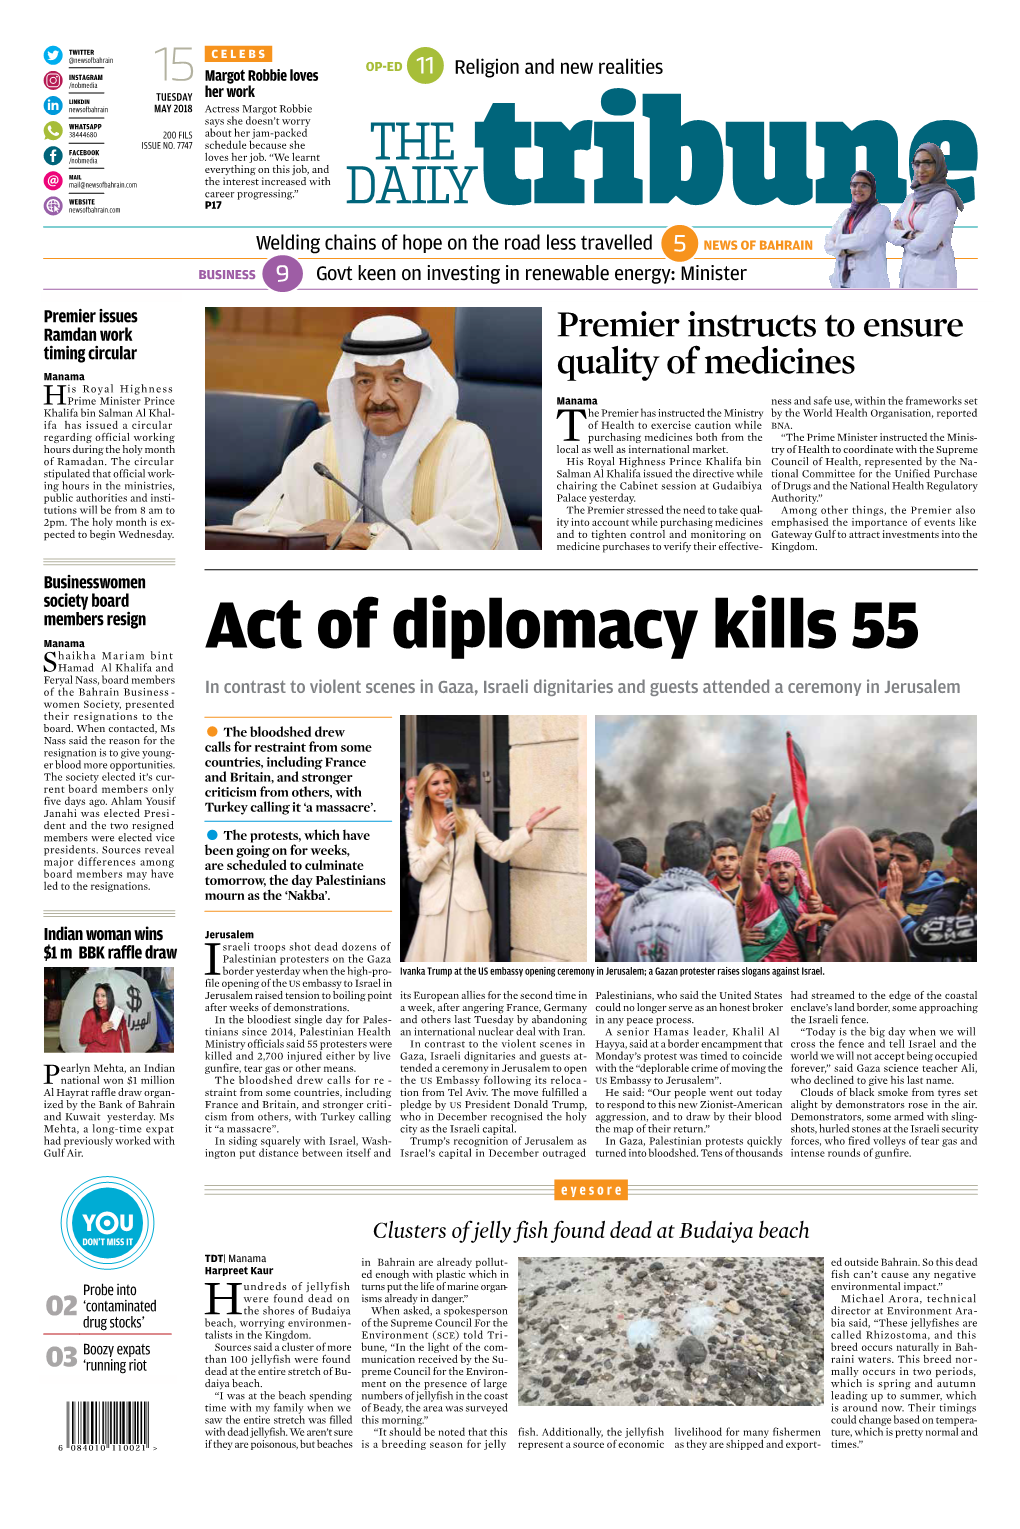 Act of Diplomacy Kills 55